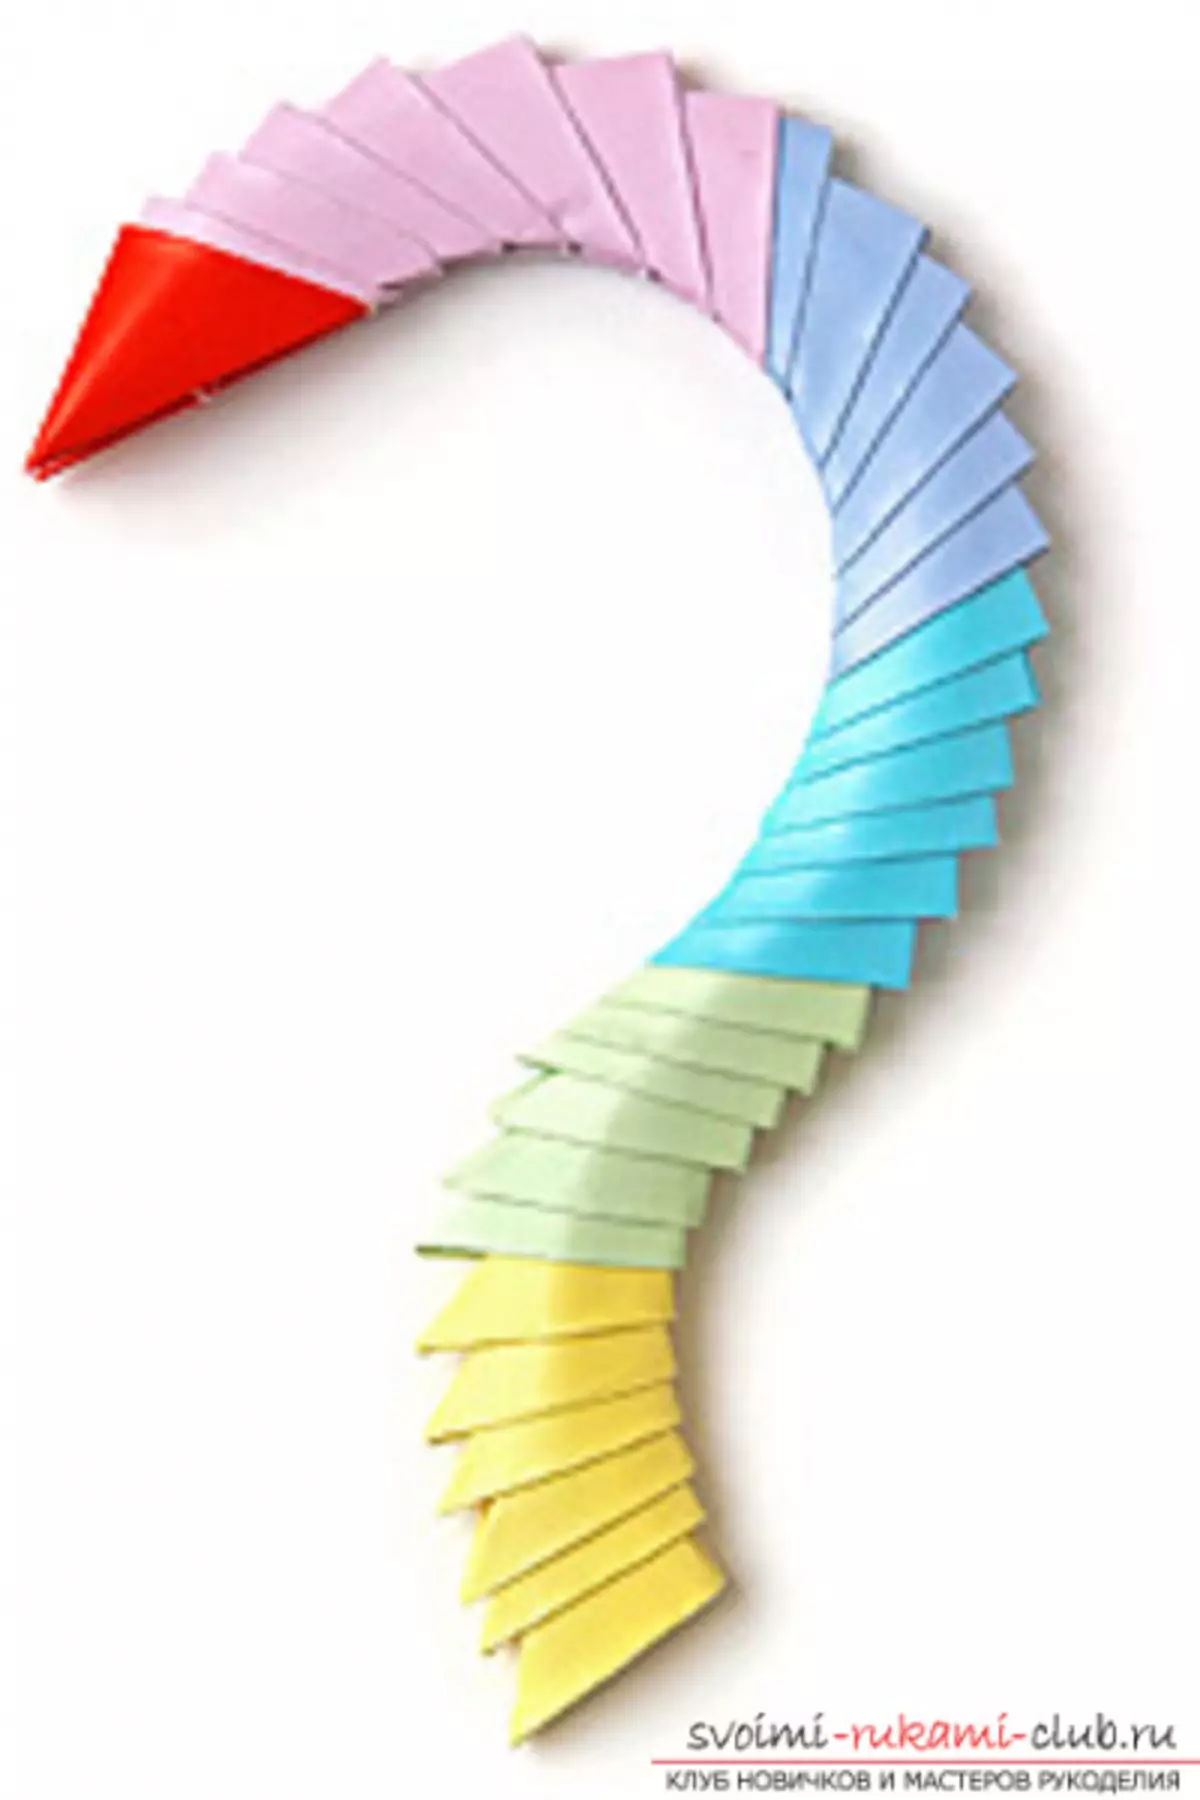 Lebed Origami από χαρτί: Πώς να κάνετε βήμα-βήμα με φωτογραφίες και βίντεο